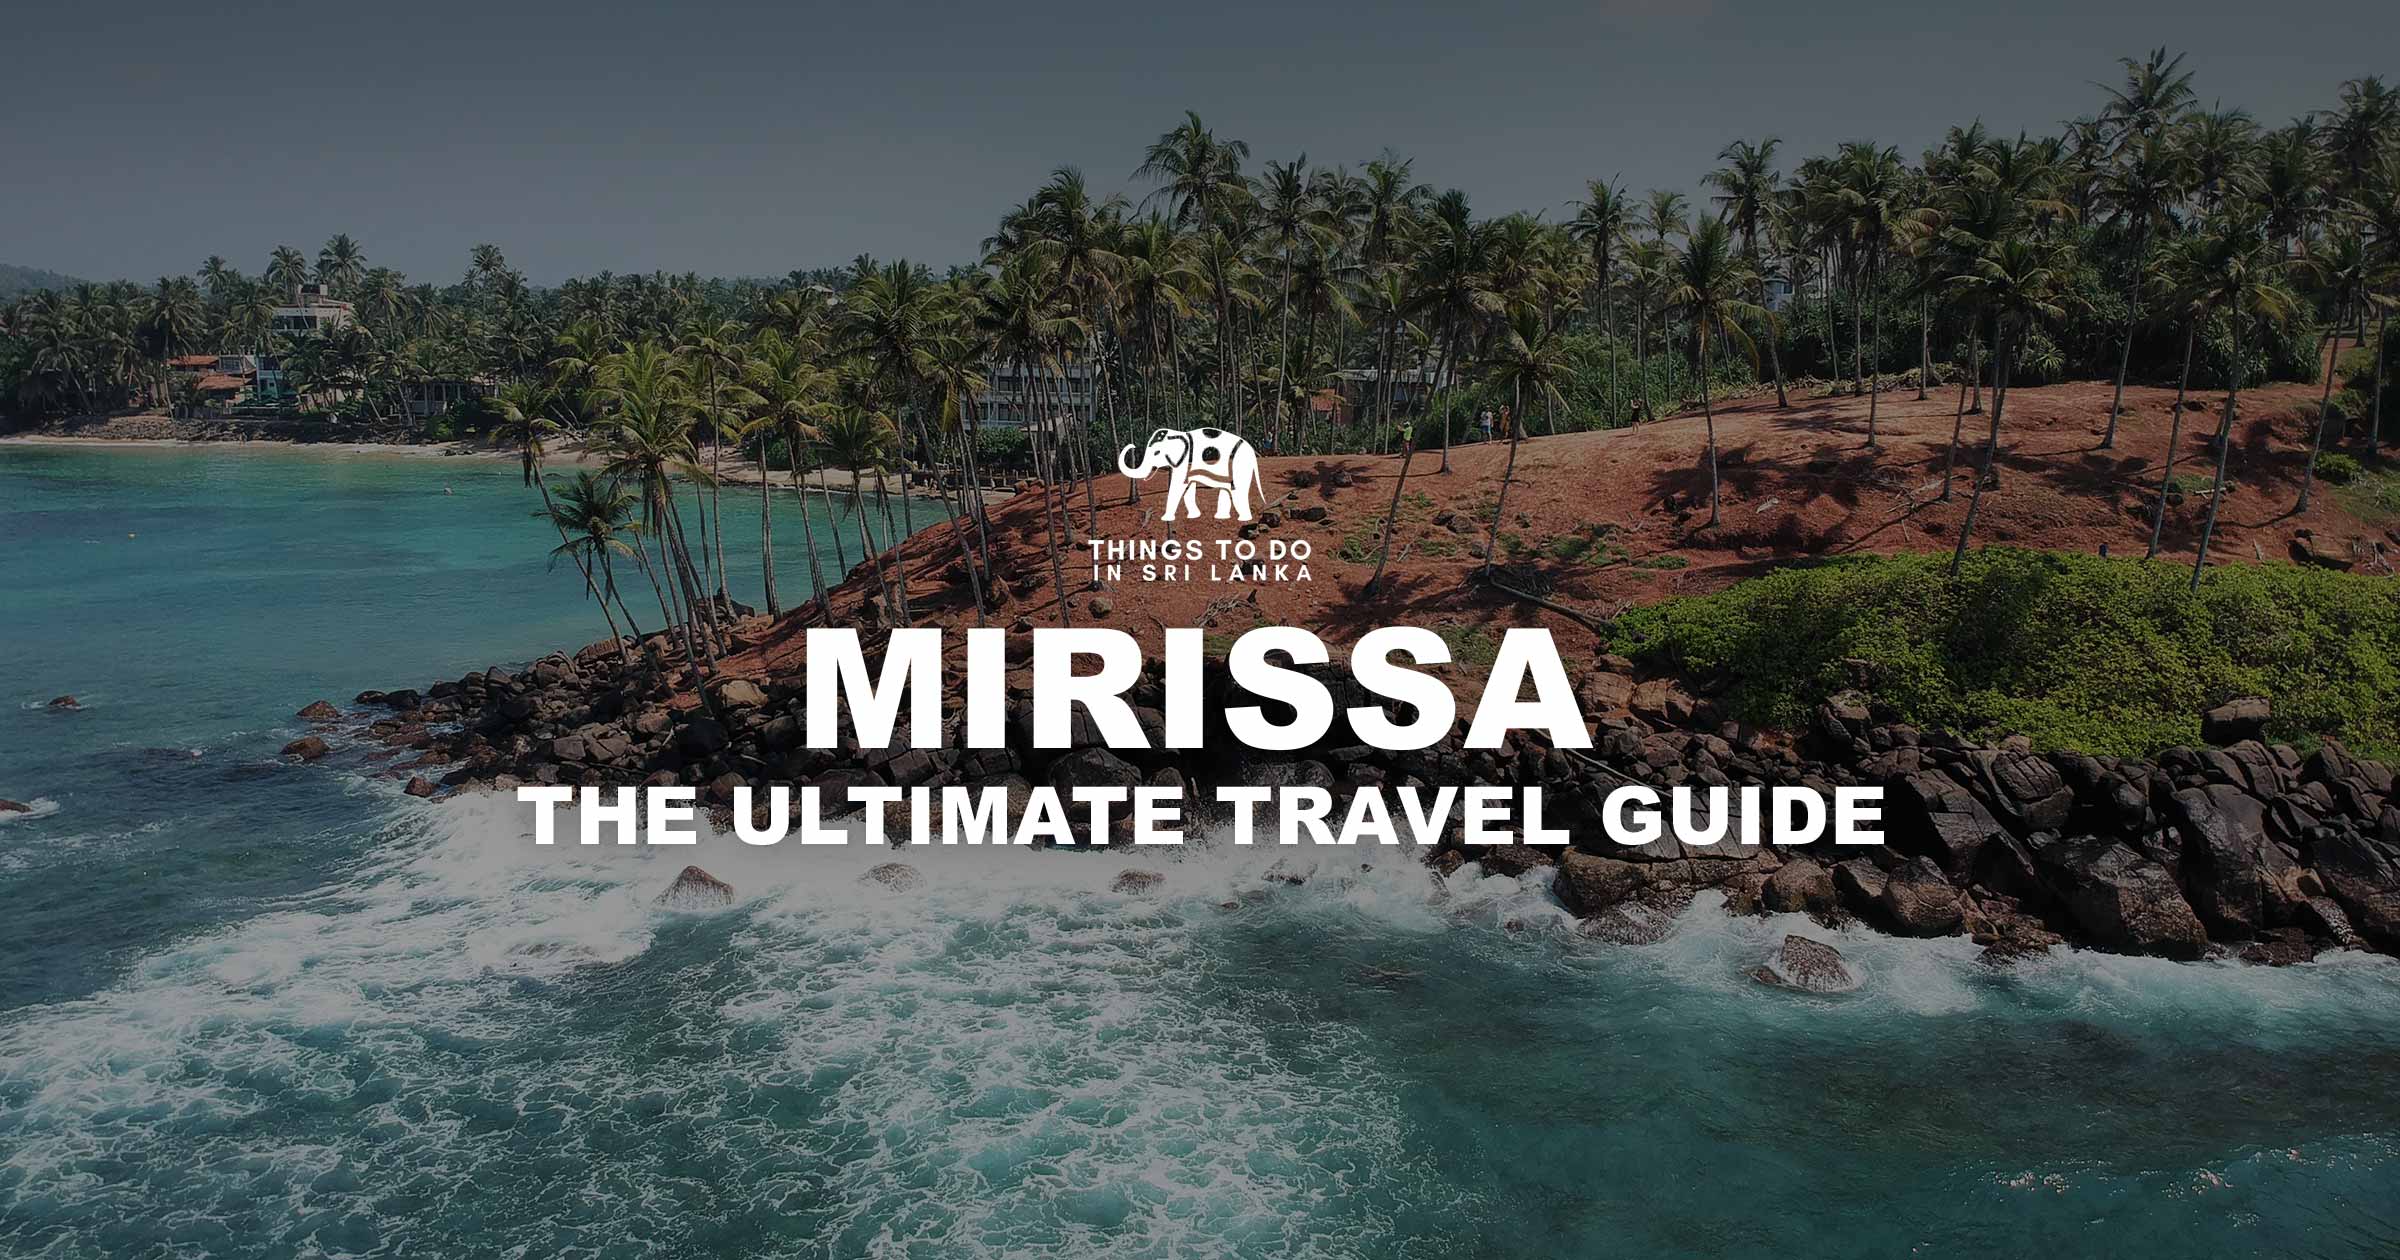 Mirissa - The Ultimate Travel Guide